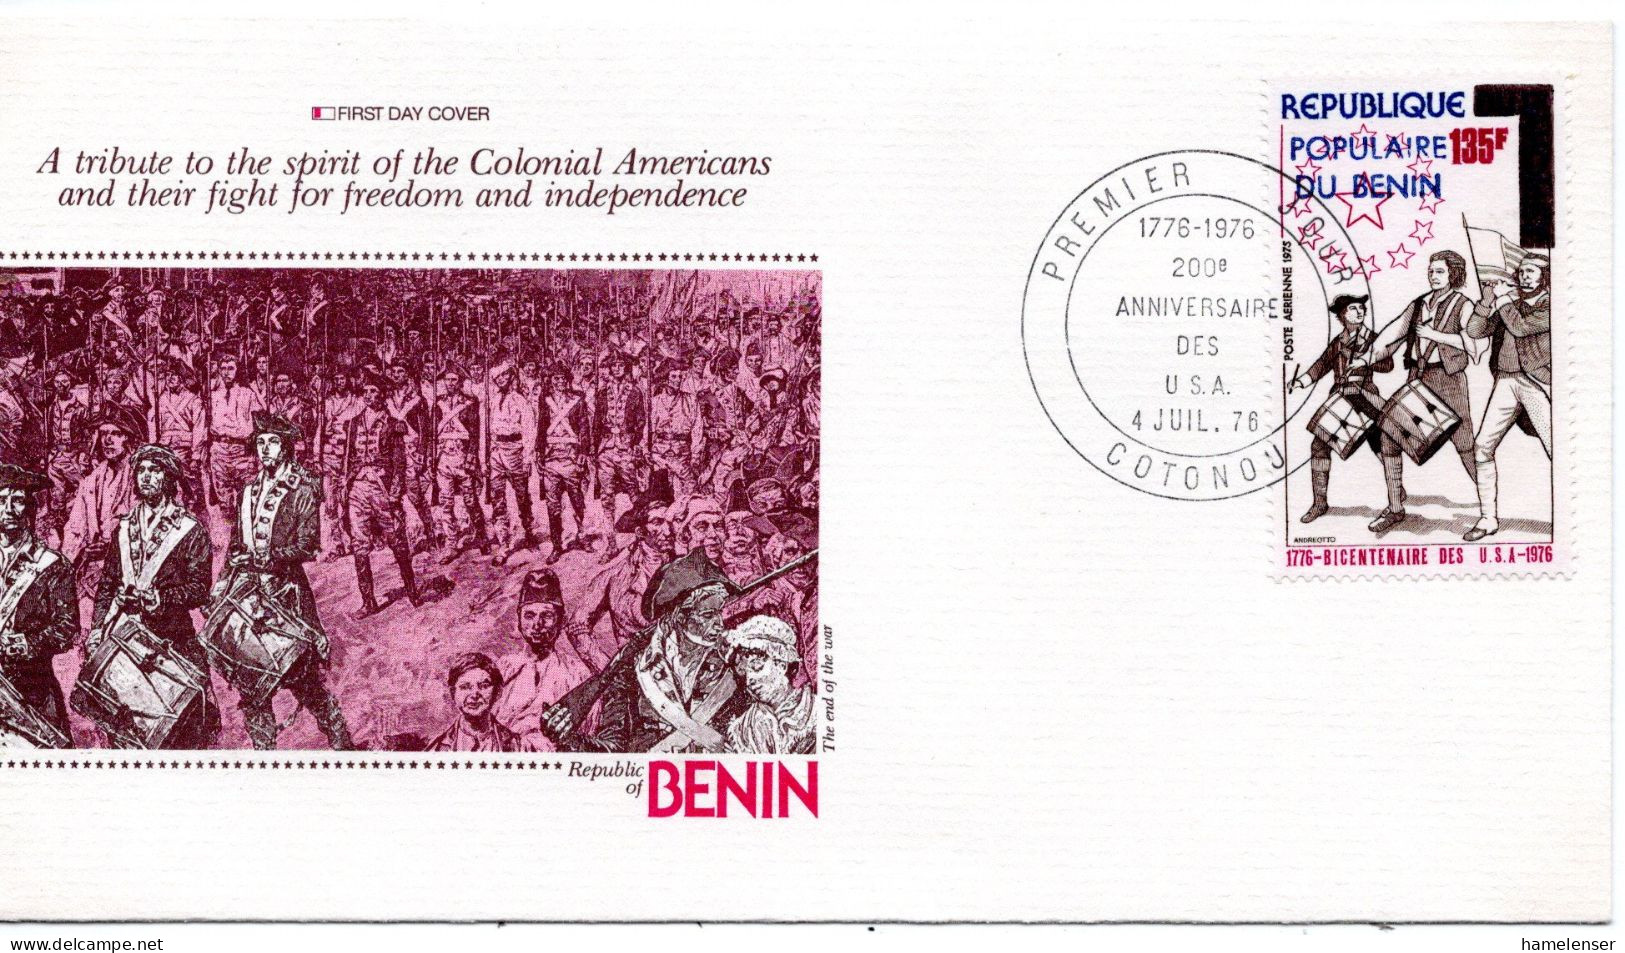 62658 - Benin - 1976 - 135F 200 Jahre USA A FDC COTONOU - Onafhankelijkheid USA